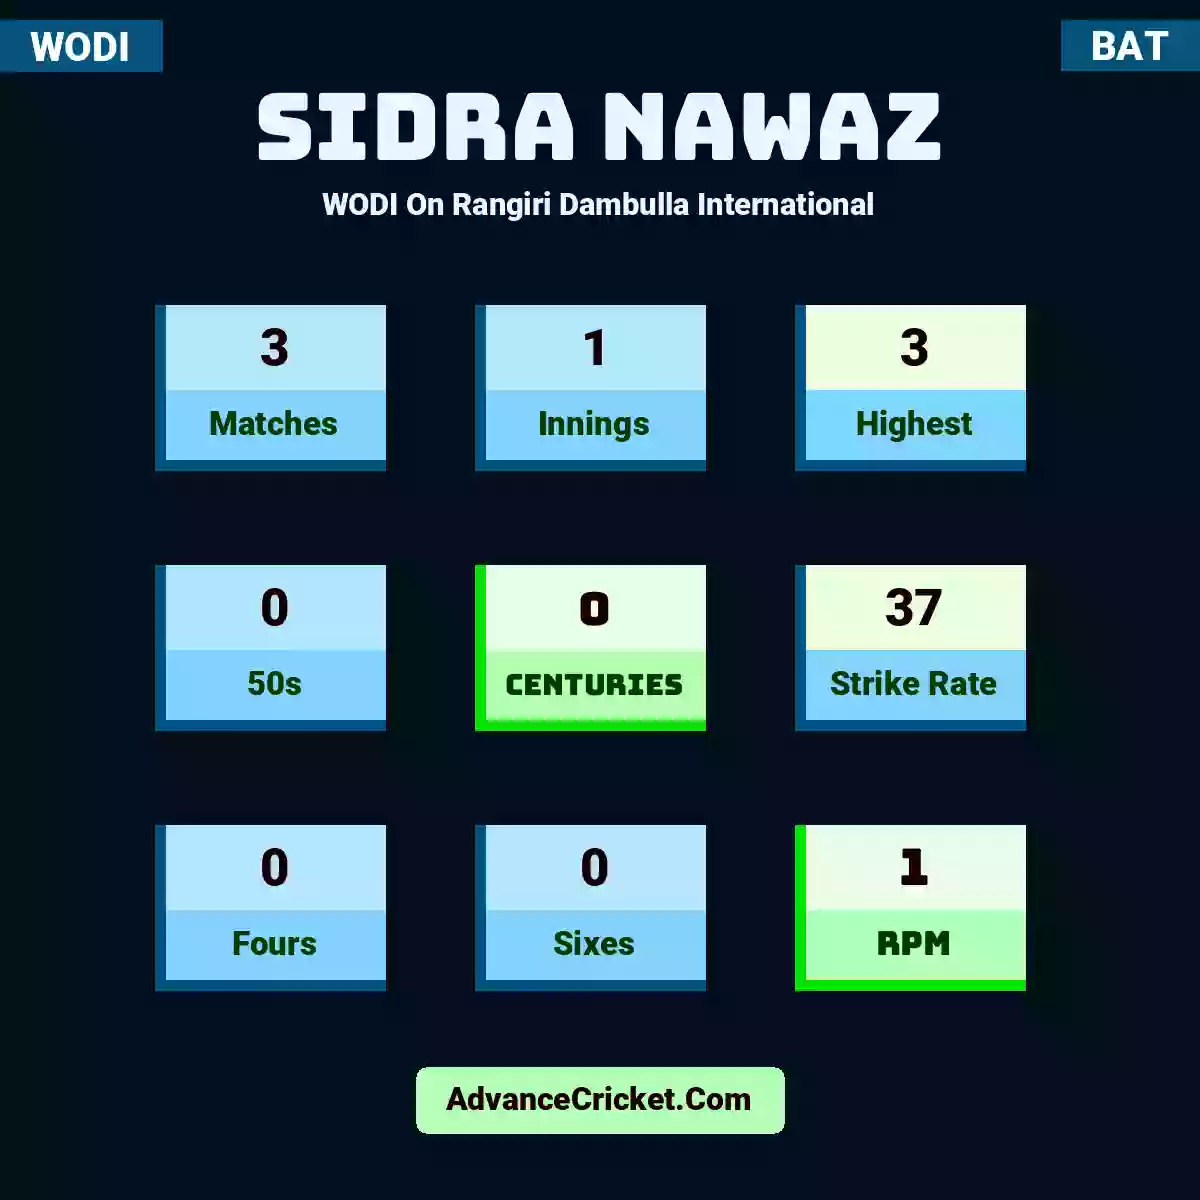 Sidra Nawaz WODI  On Rangiri Dambulla International, Sidra Nawaz played 3 matches, scored 3 runs as highest, 0 half-centuries, and 0 centuries, with a strike rate of 37. S.Nawaz hit 0 fours and 0 sixes, with an RPM of 1.